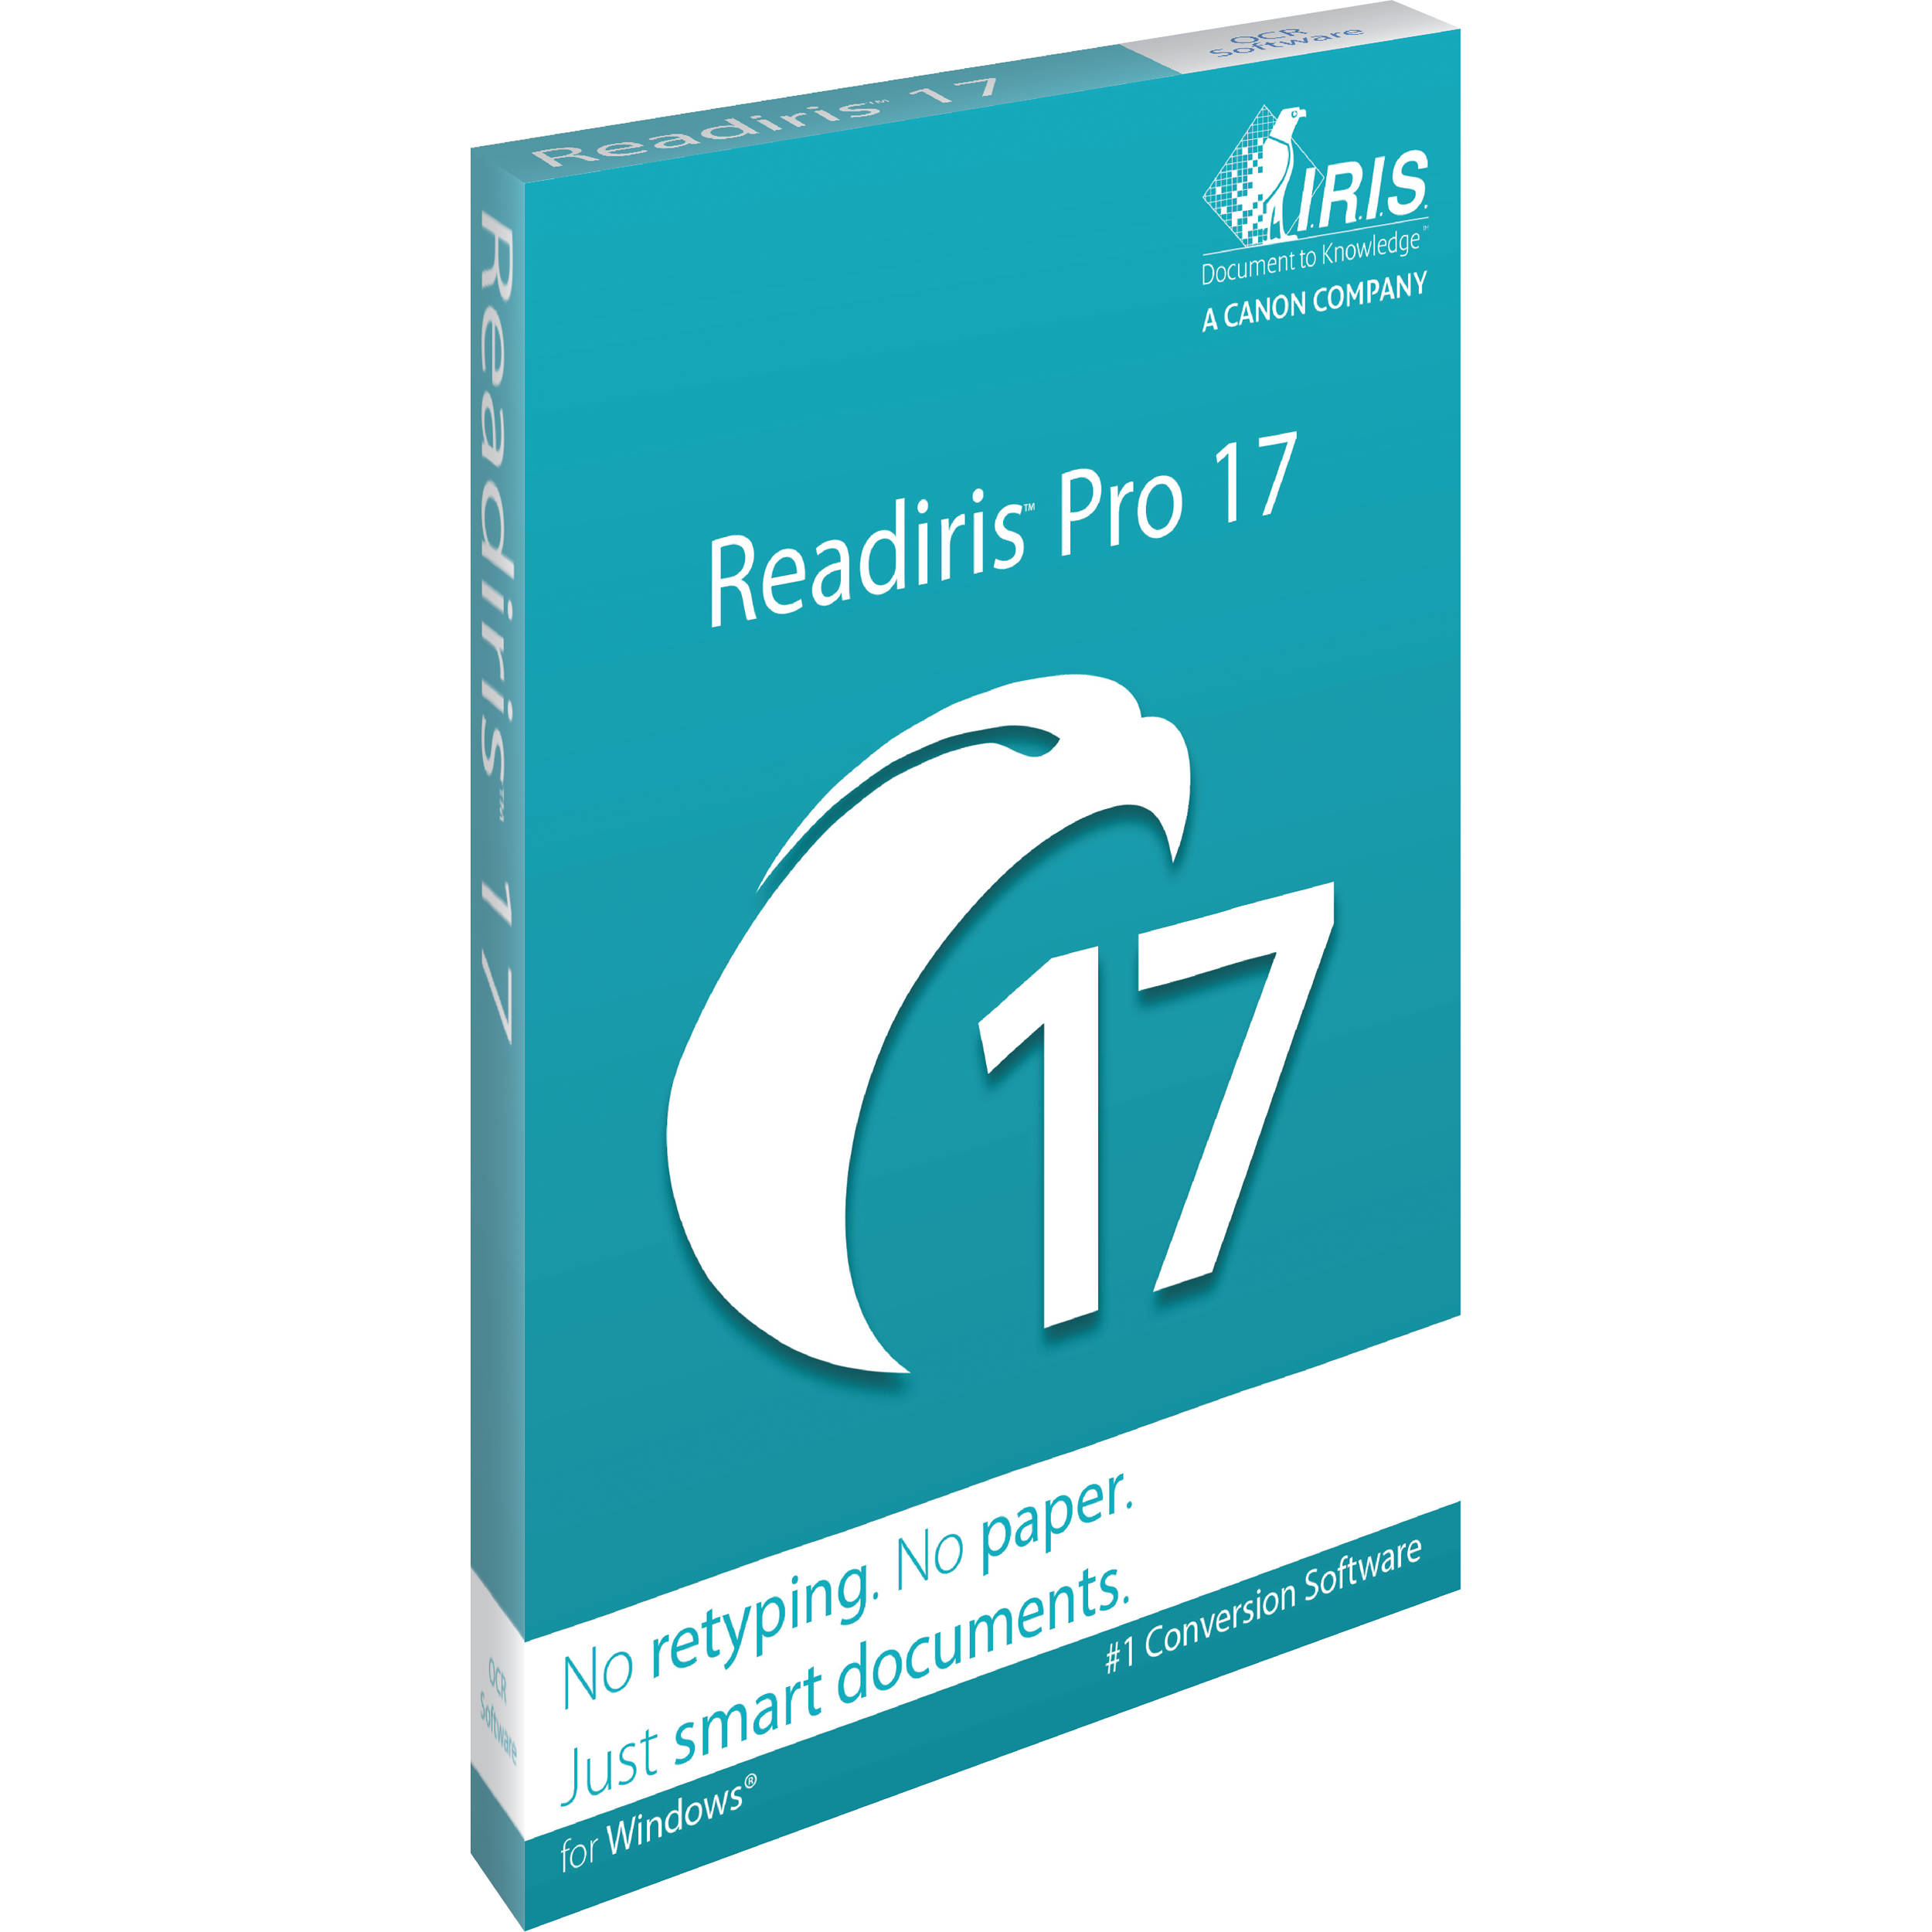 Readiris pro 17 for windows